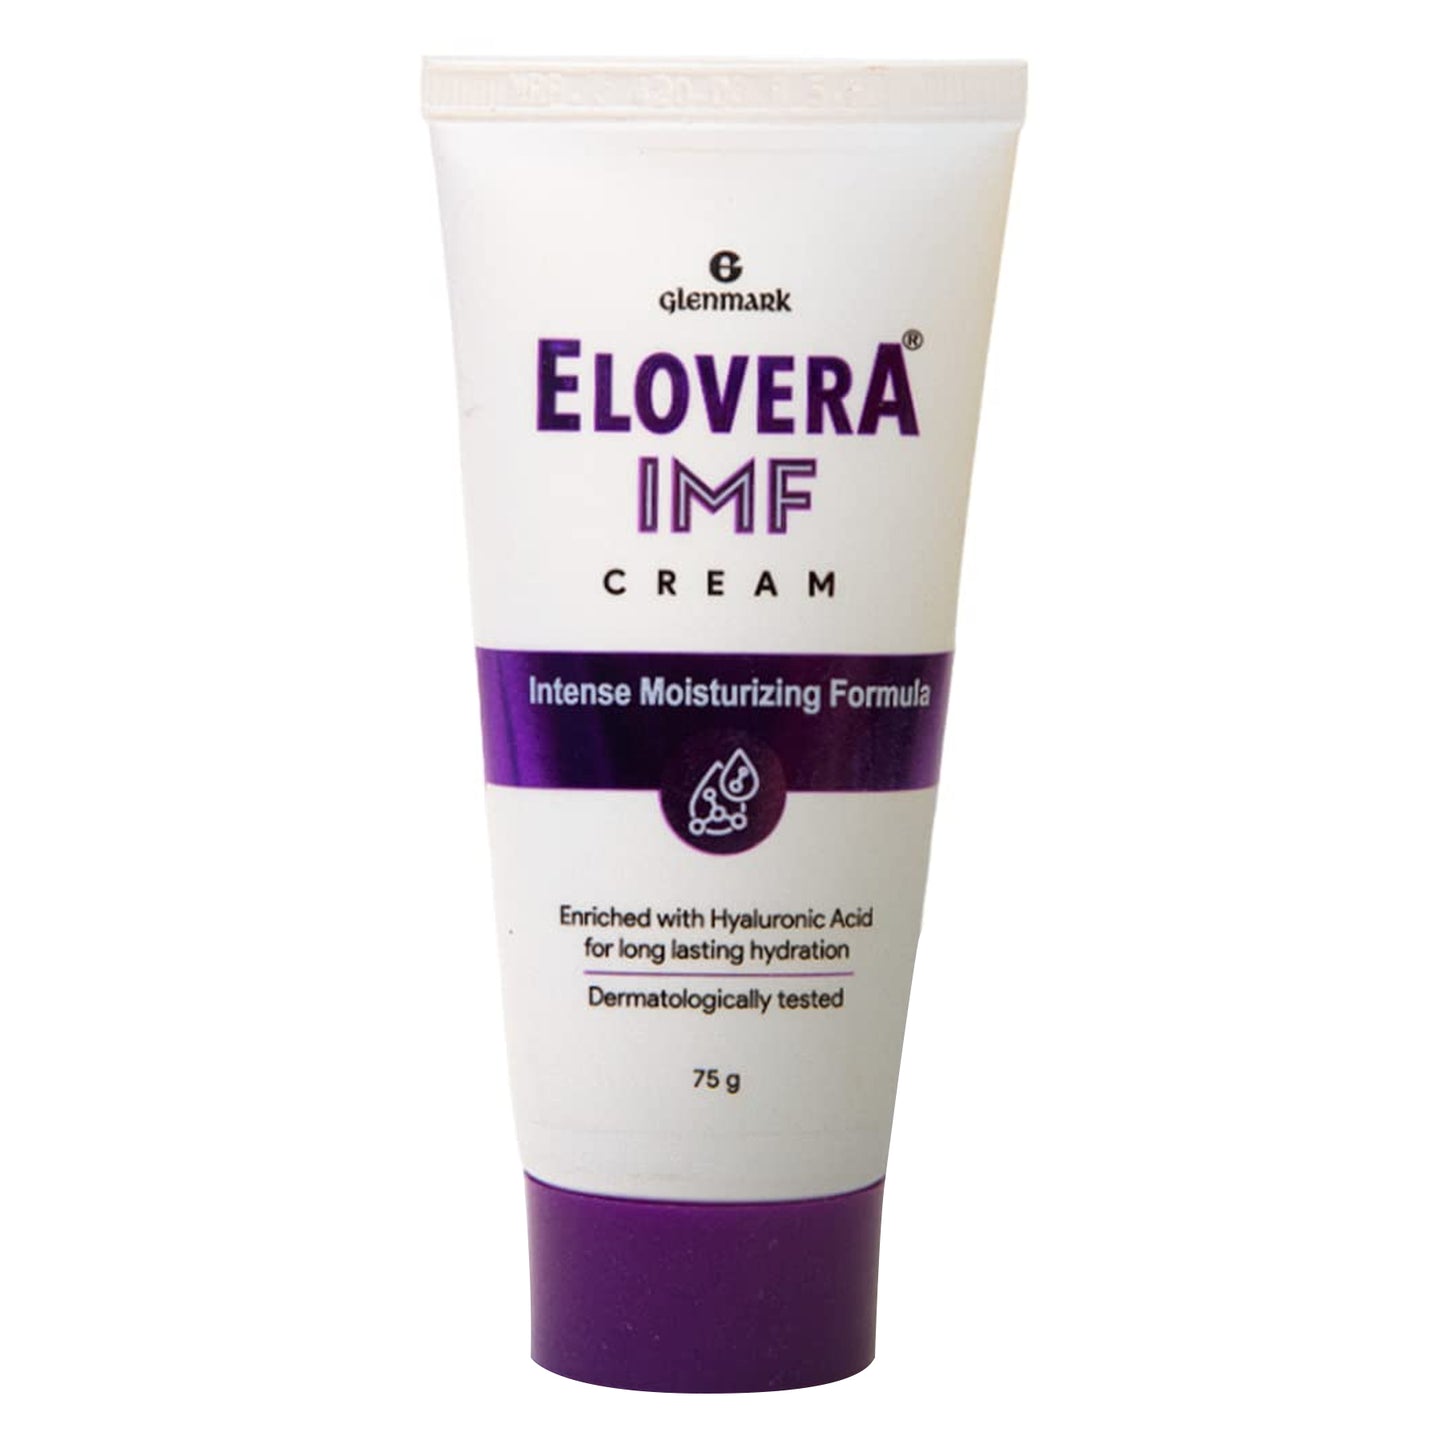 Elovera Imf Cream, 75gm